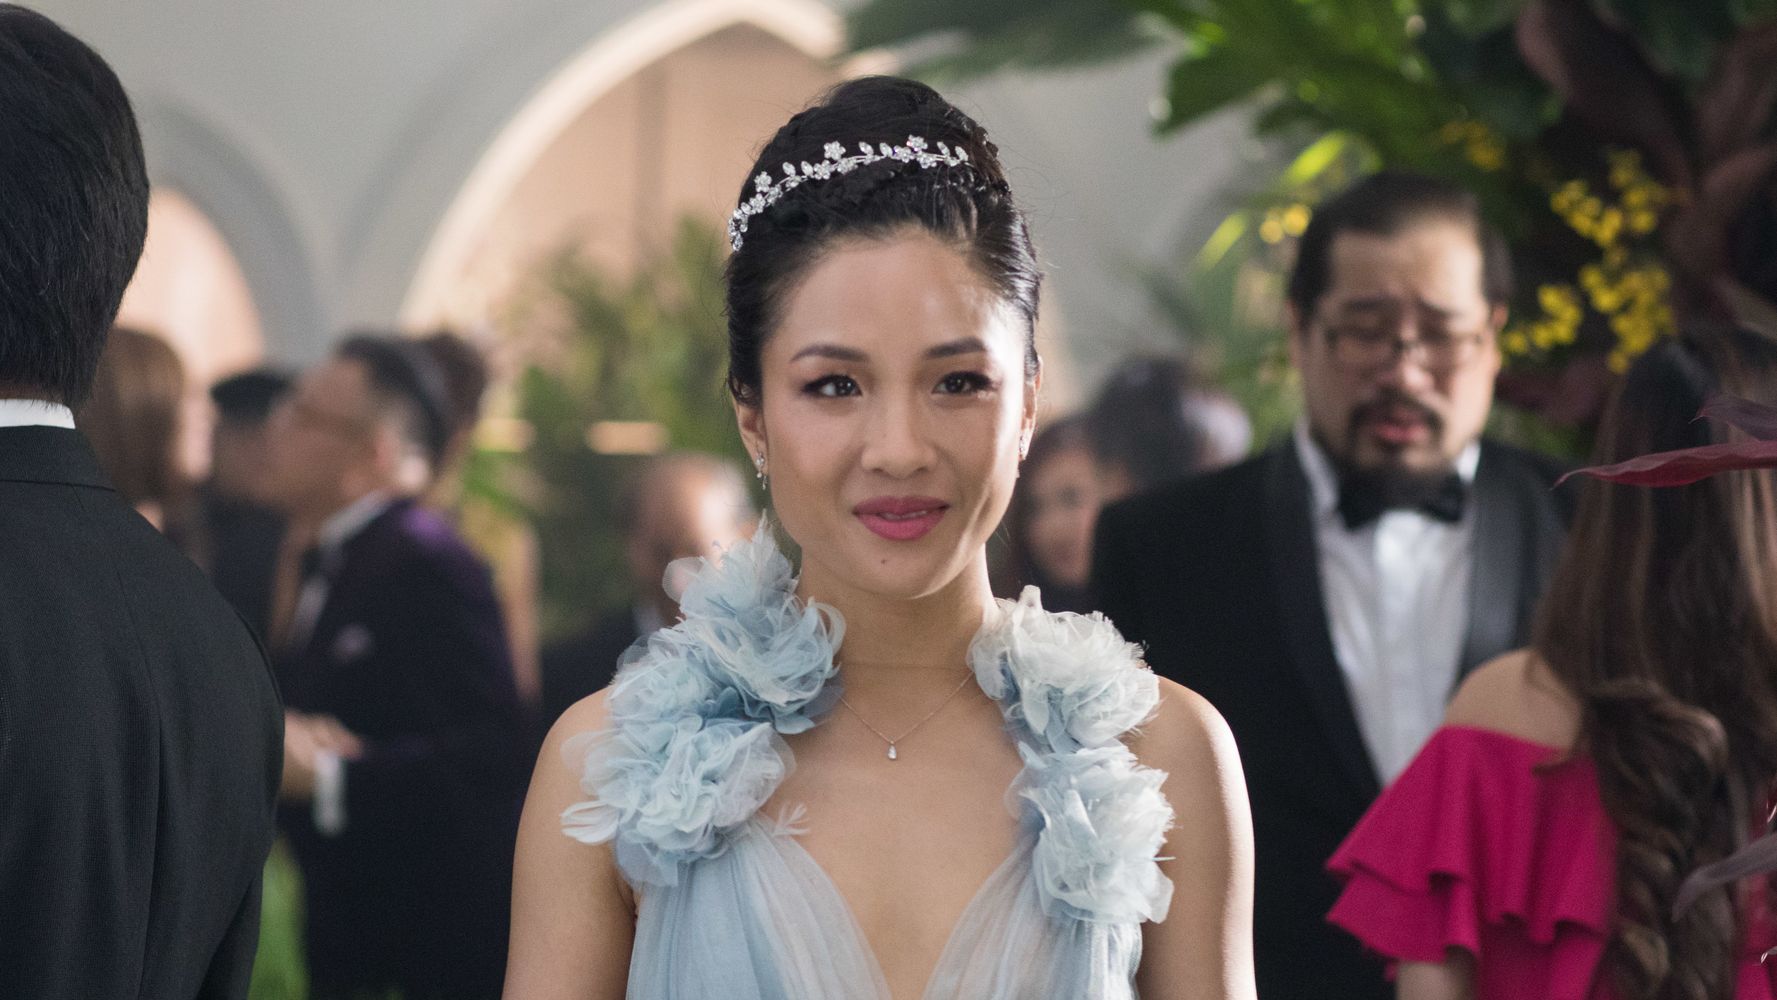 7 Secrets Behind the Crazy Rich Asians Wedding Dress